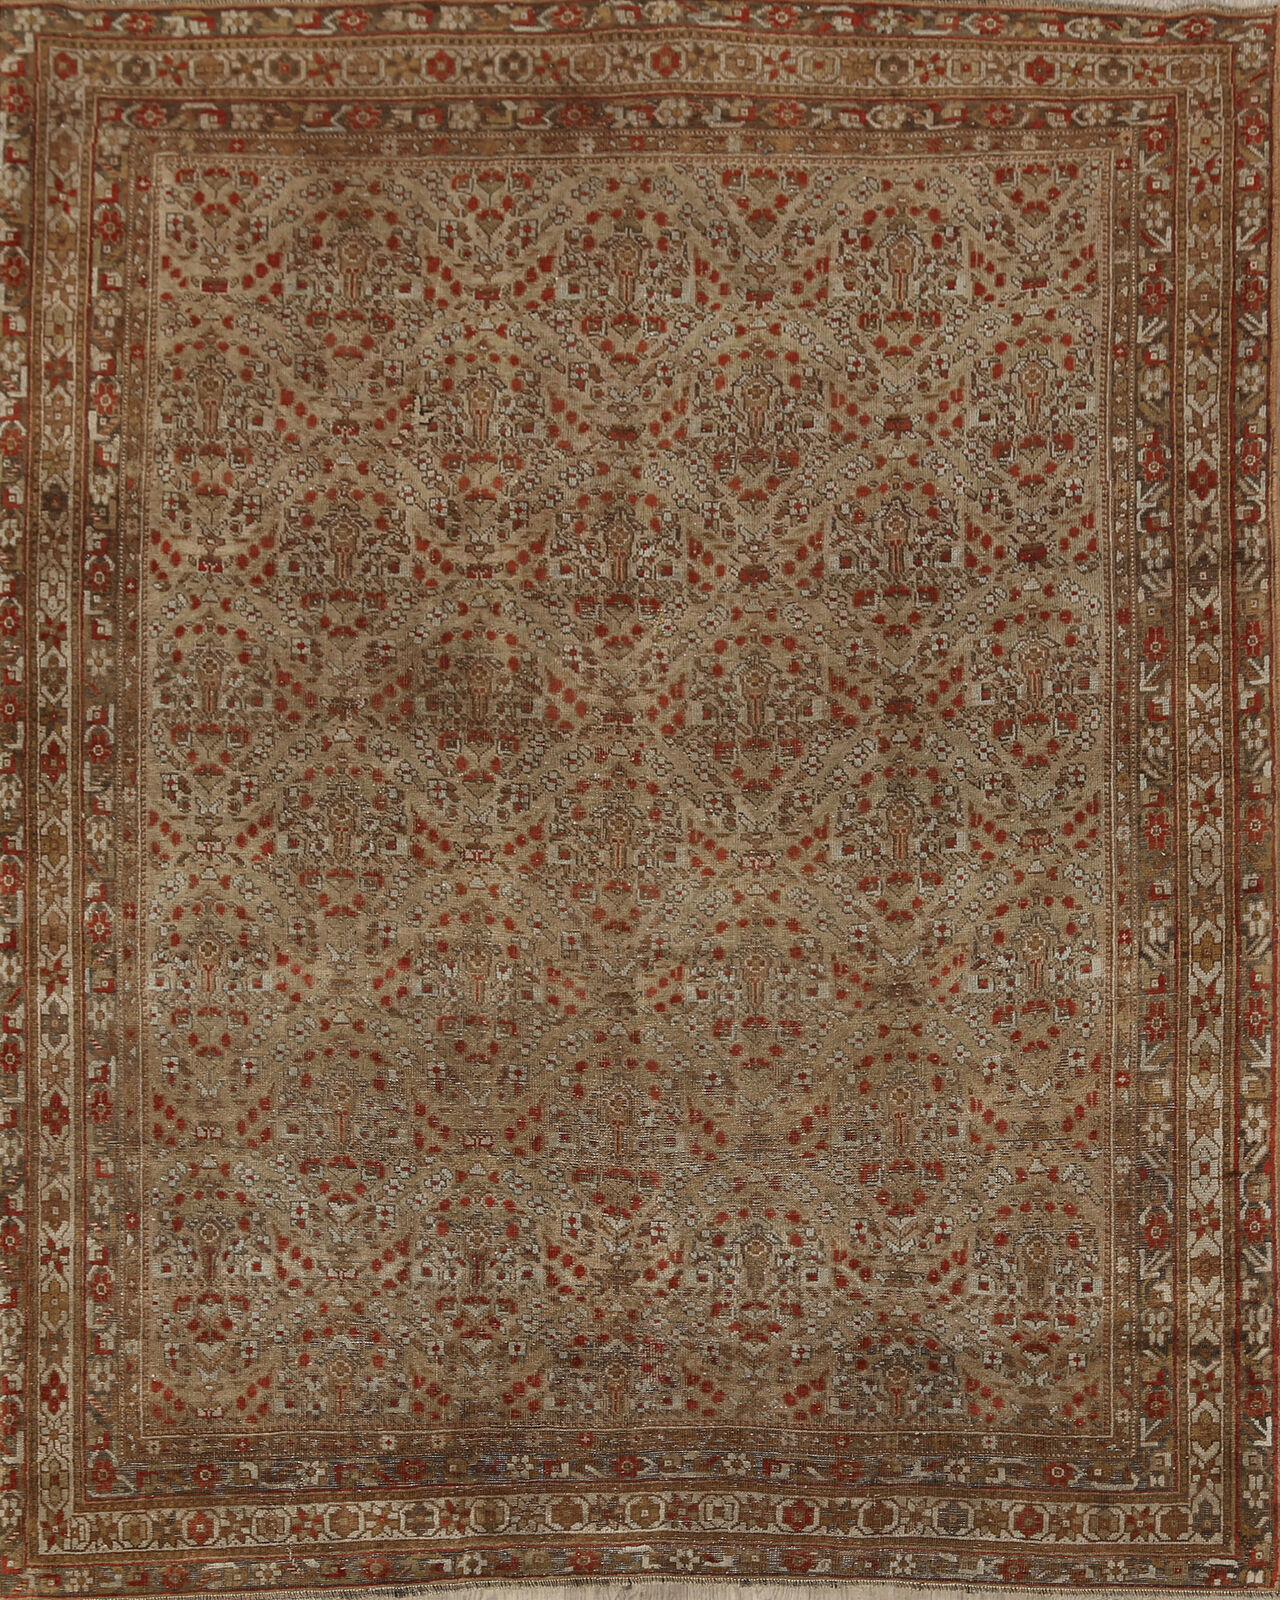 Pre-1900 Vegetable Dye Sarouk Farahan Antique Rug 5x6 Wool Hand-knotted Carpet